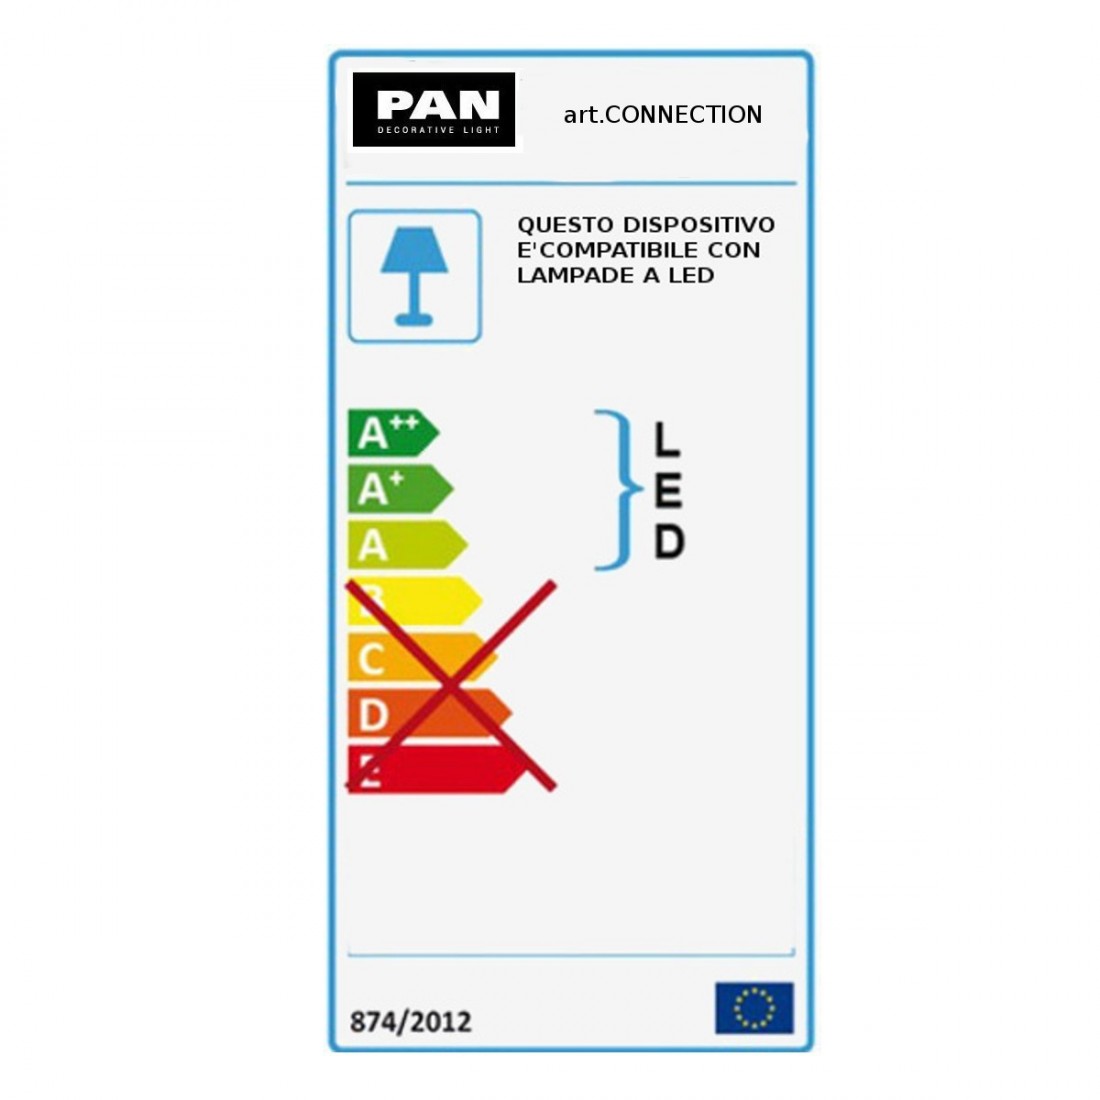 Applique PN-CONNECTION EST01004 E27 LED moderno bianco biemissione esterno lampada parete IP54